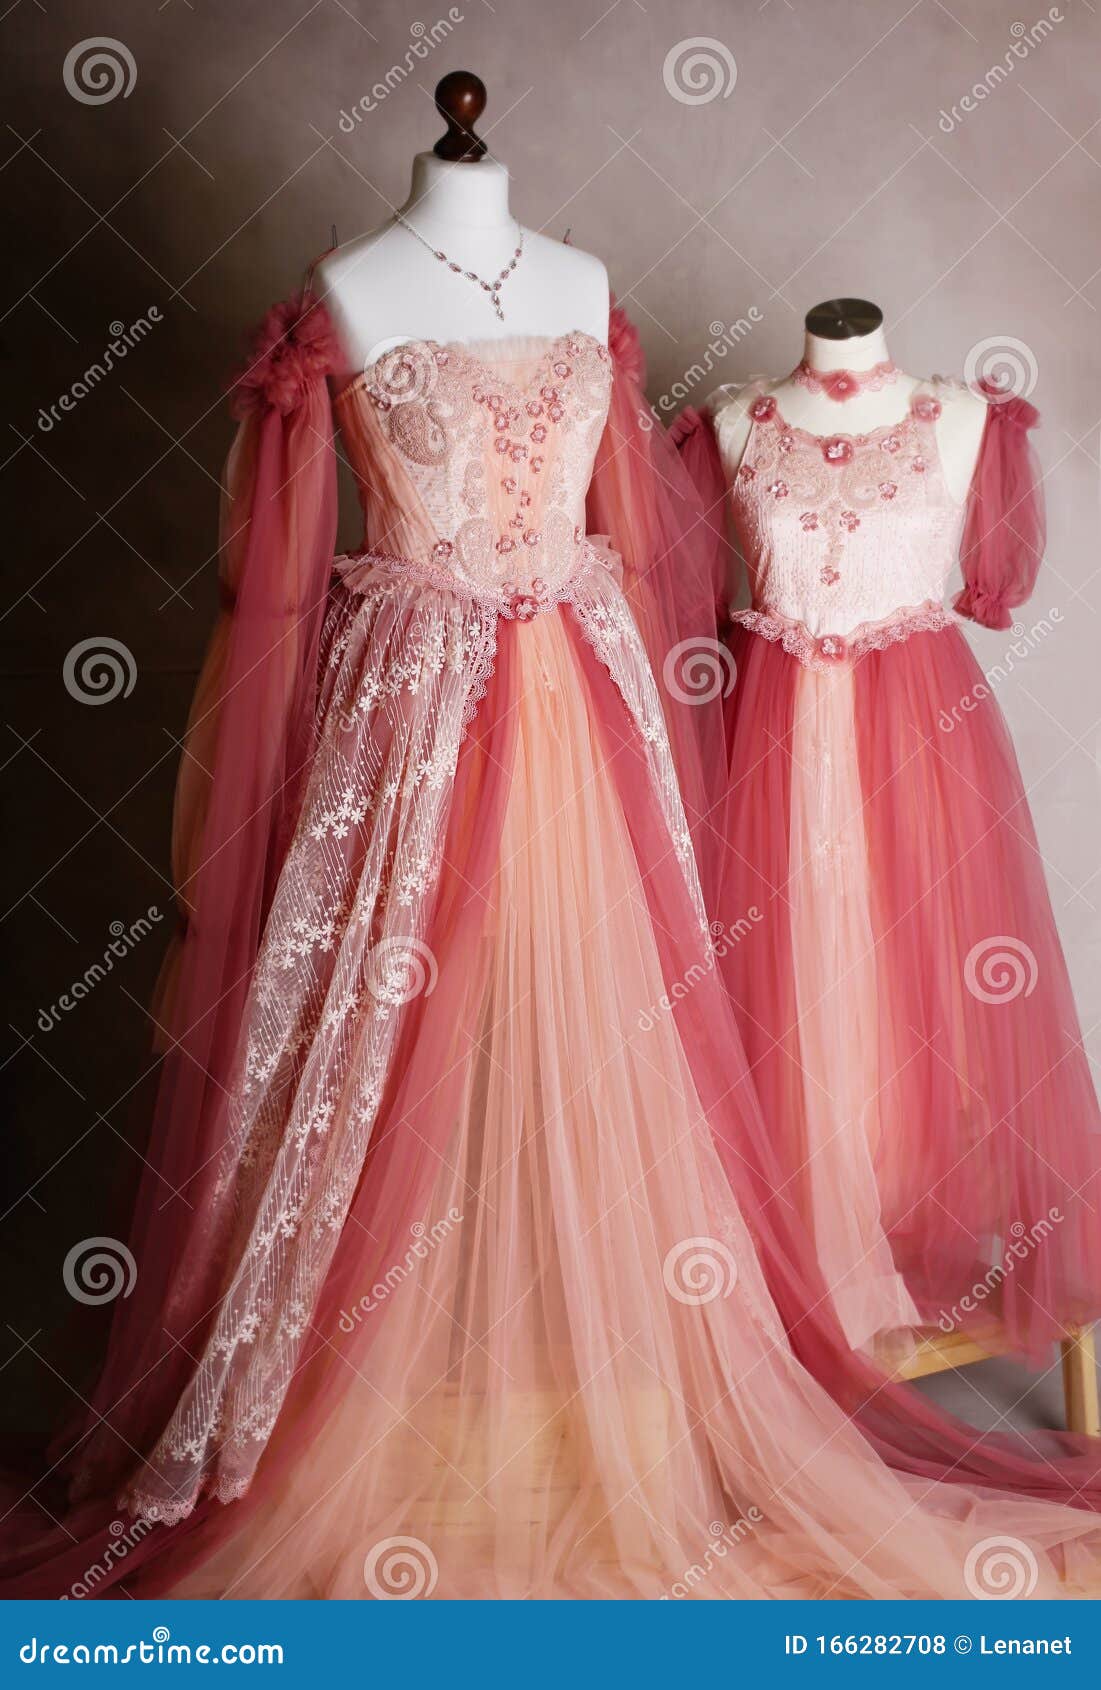 Mother daughter star floor length dresses in pink blush color